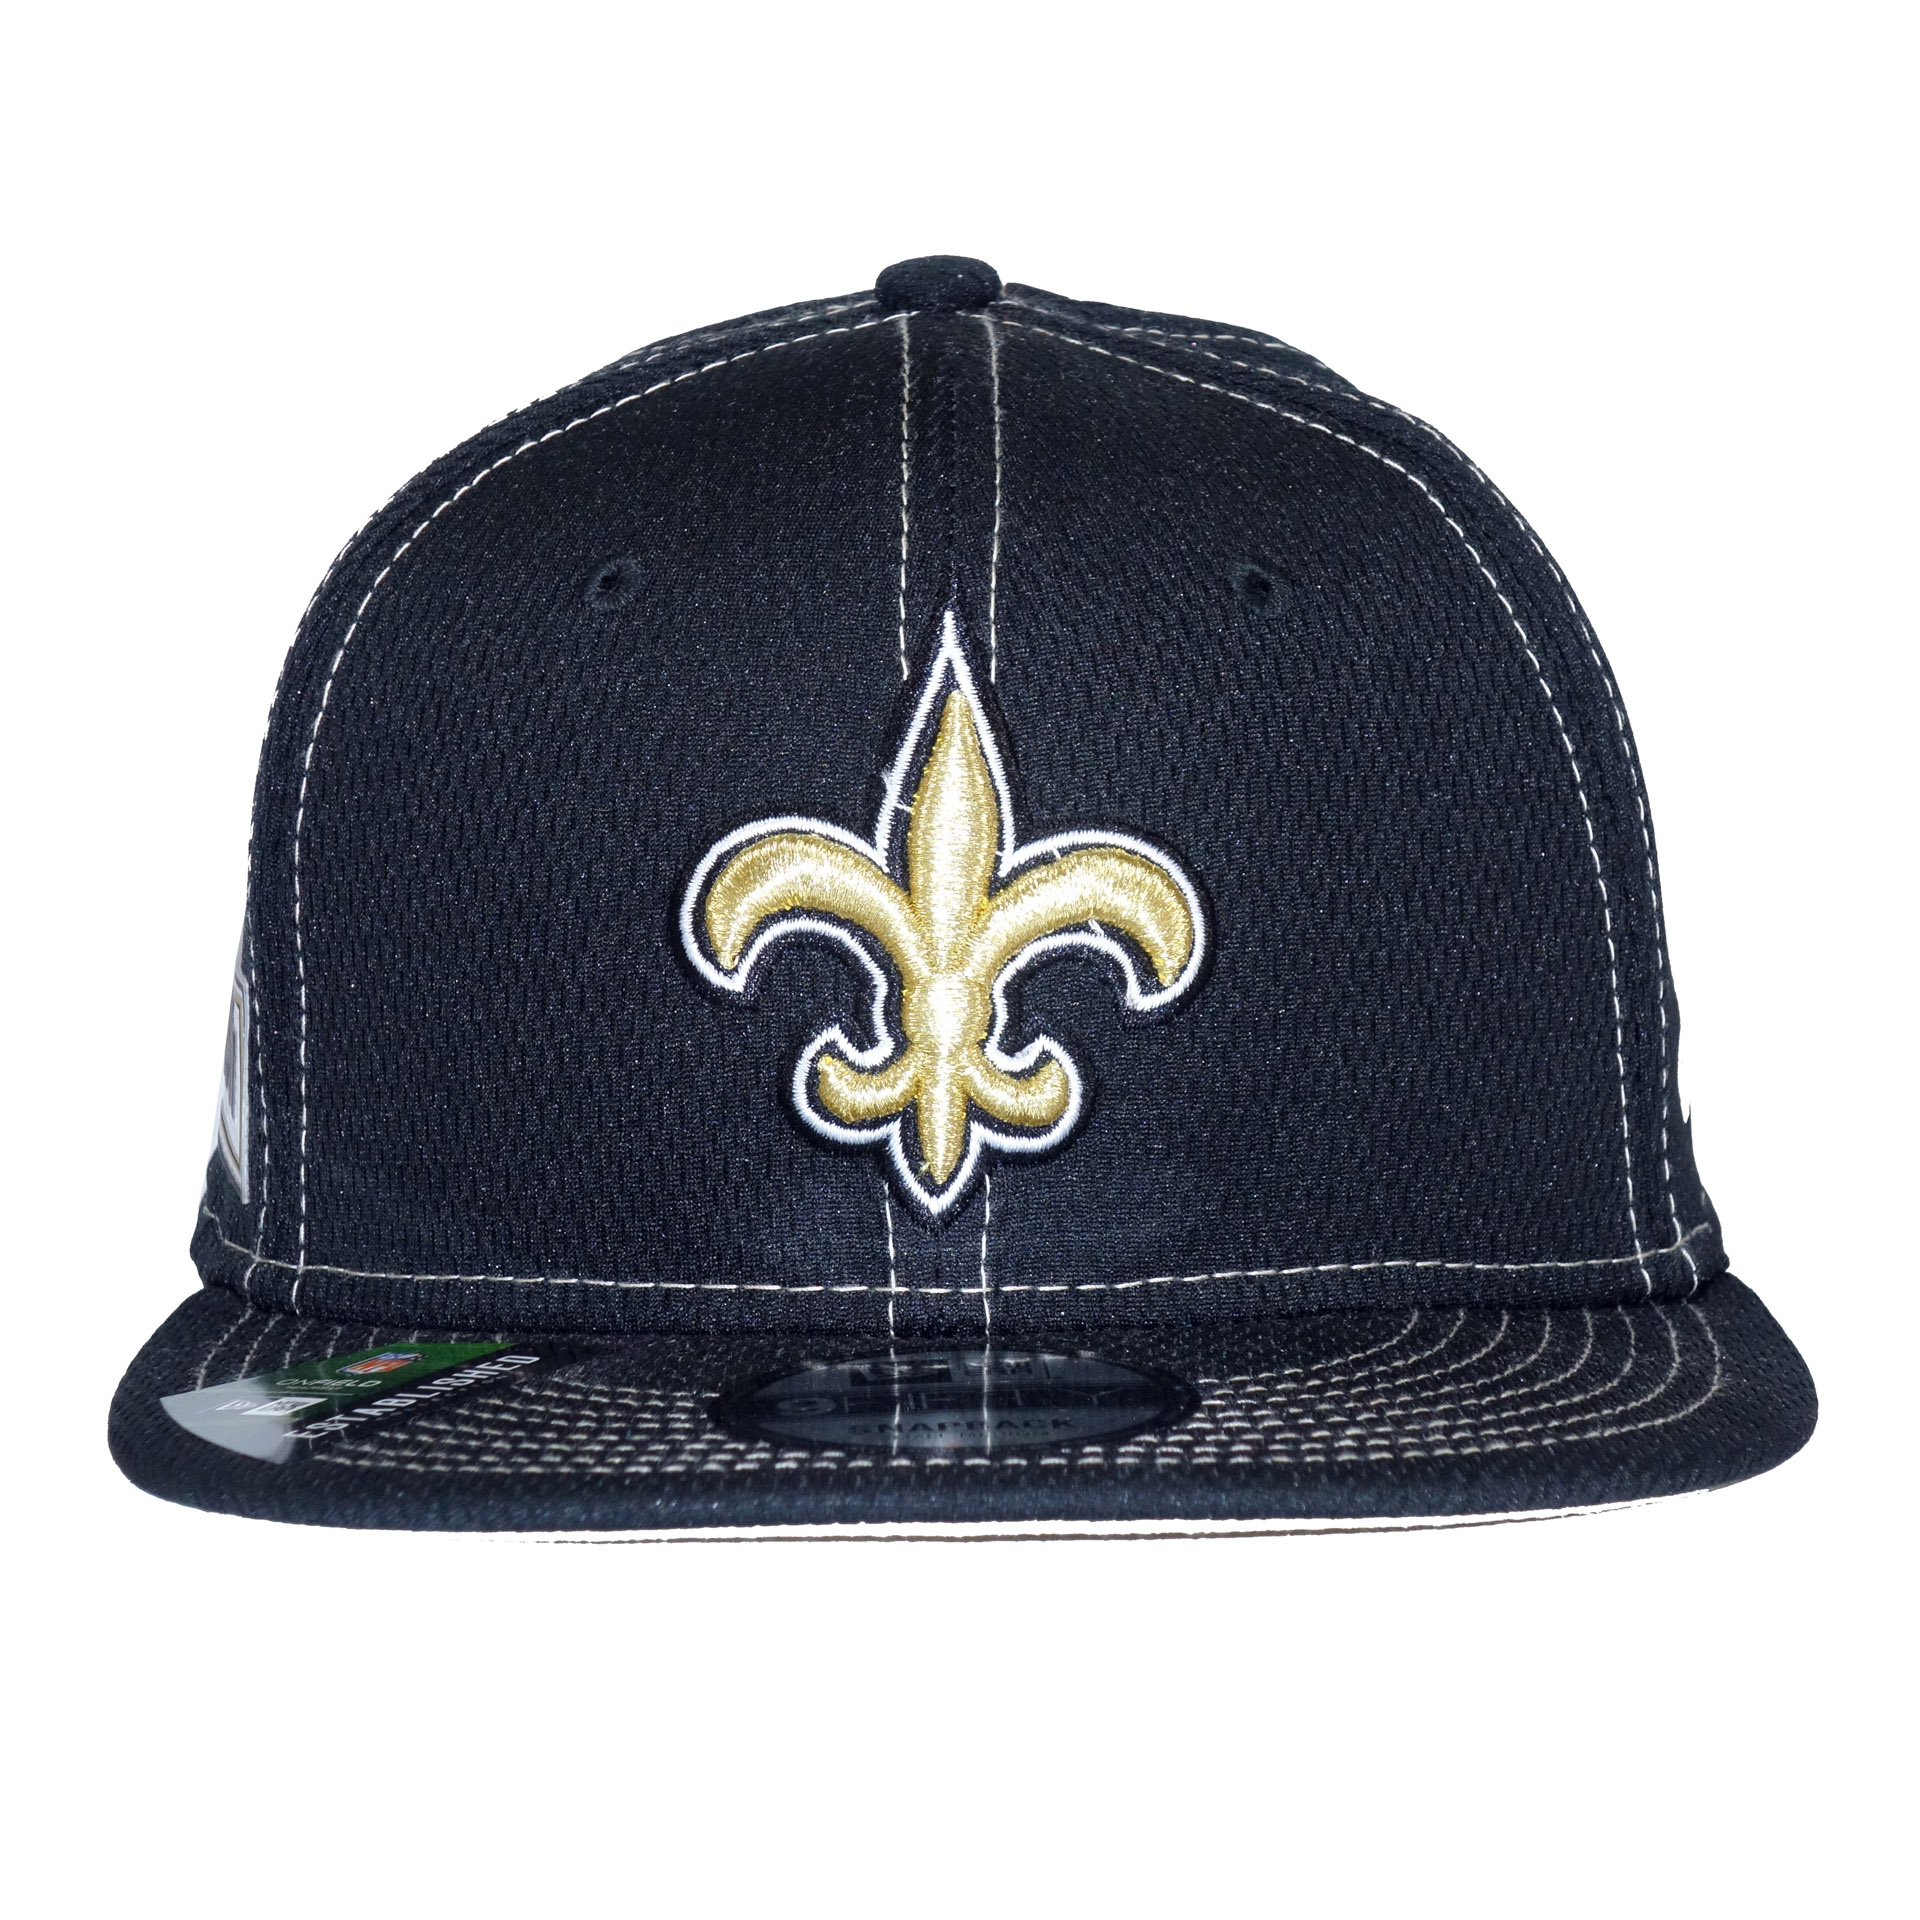 NFL New Era Cap New Orleans Saints